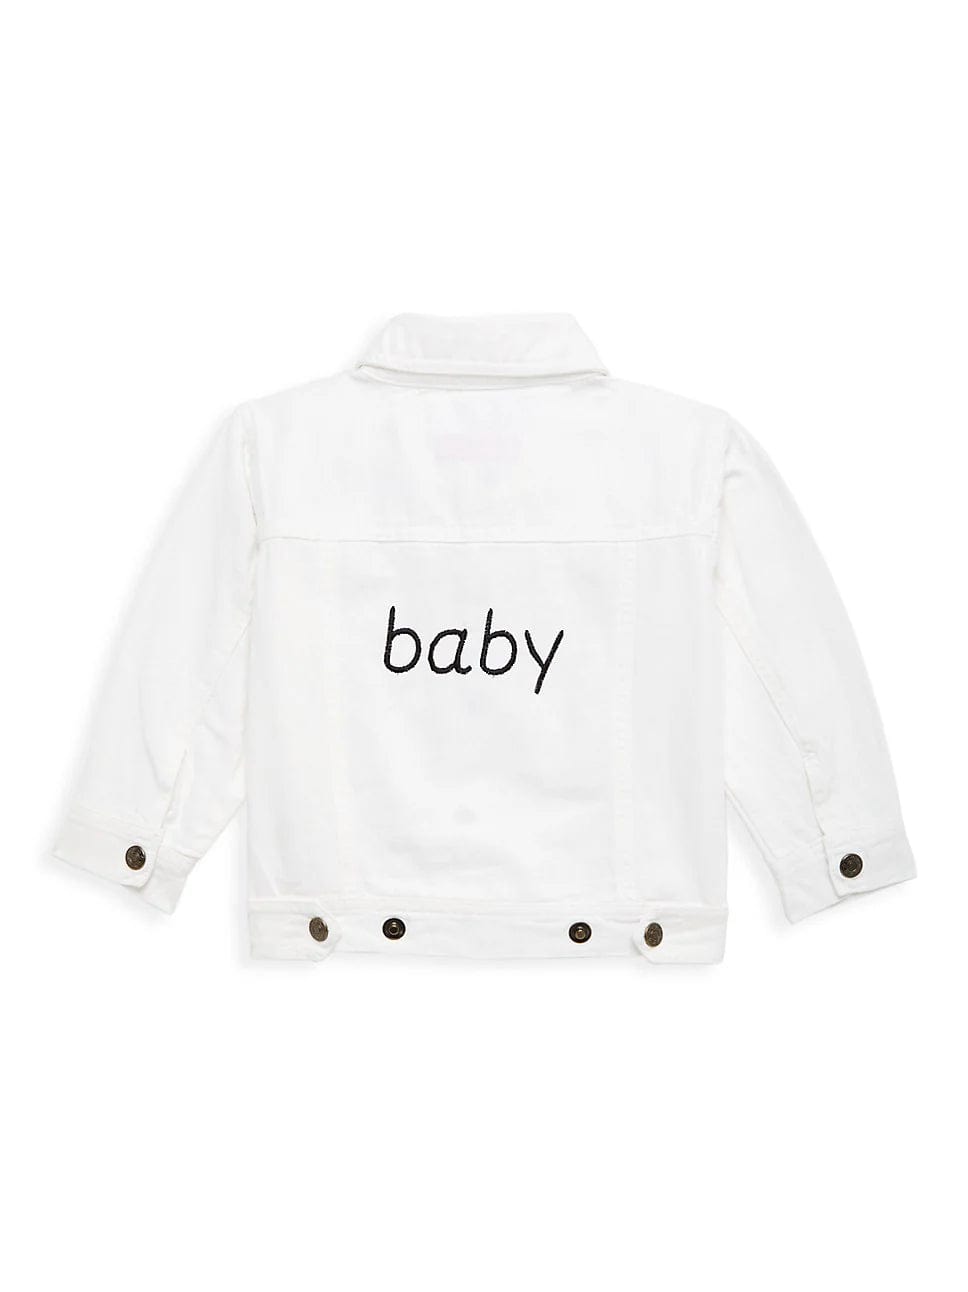 juju + stitch Personalized Custom Embroidered "baby" White Denim Jacket